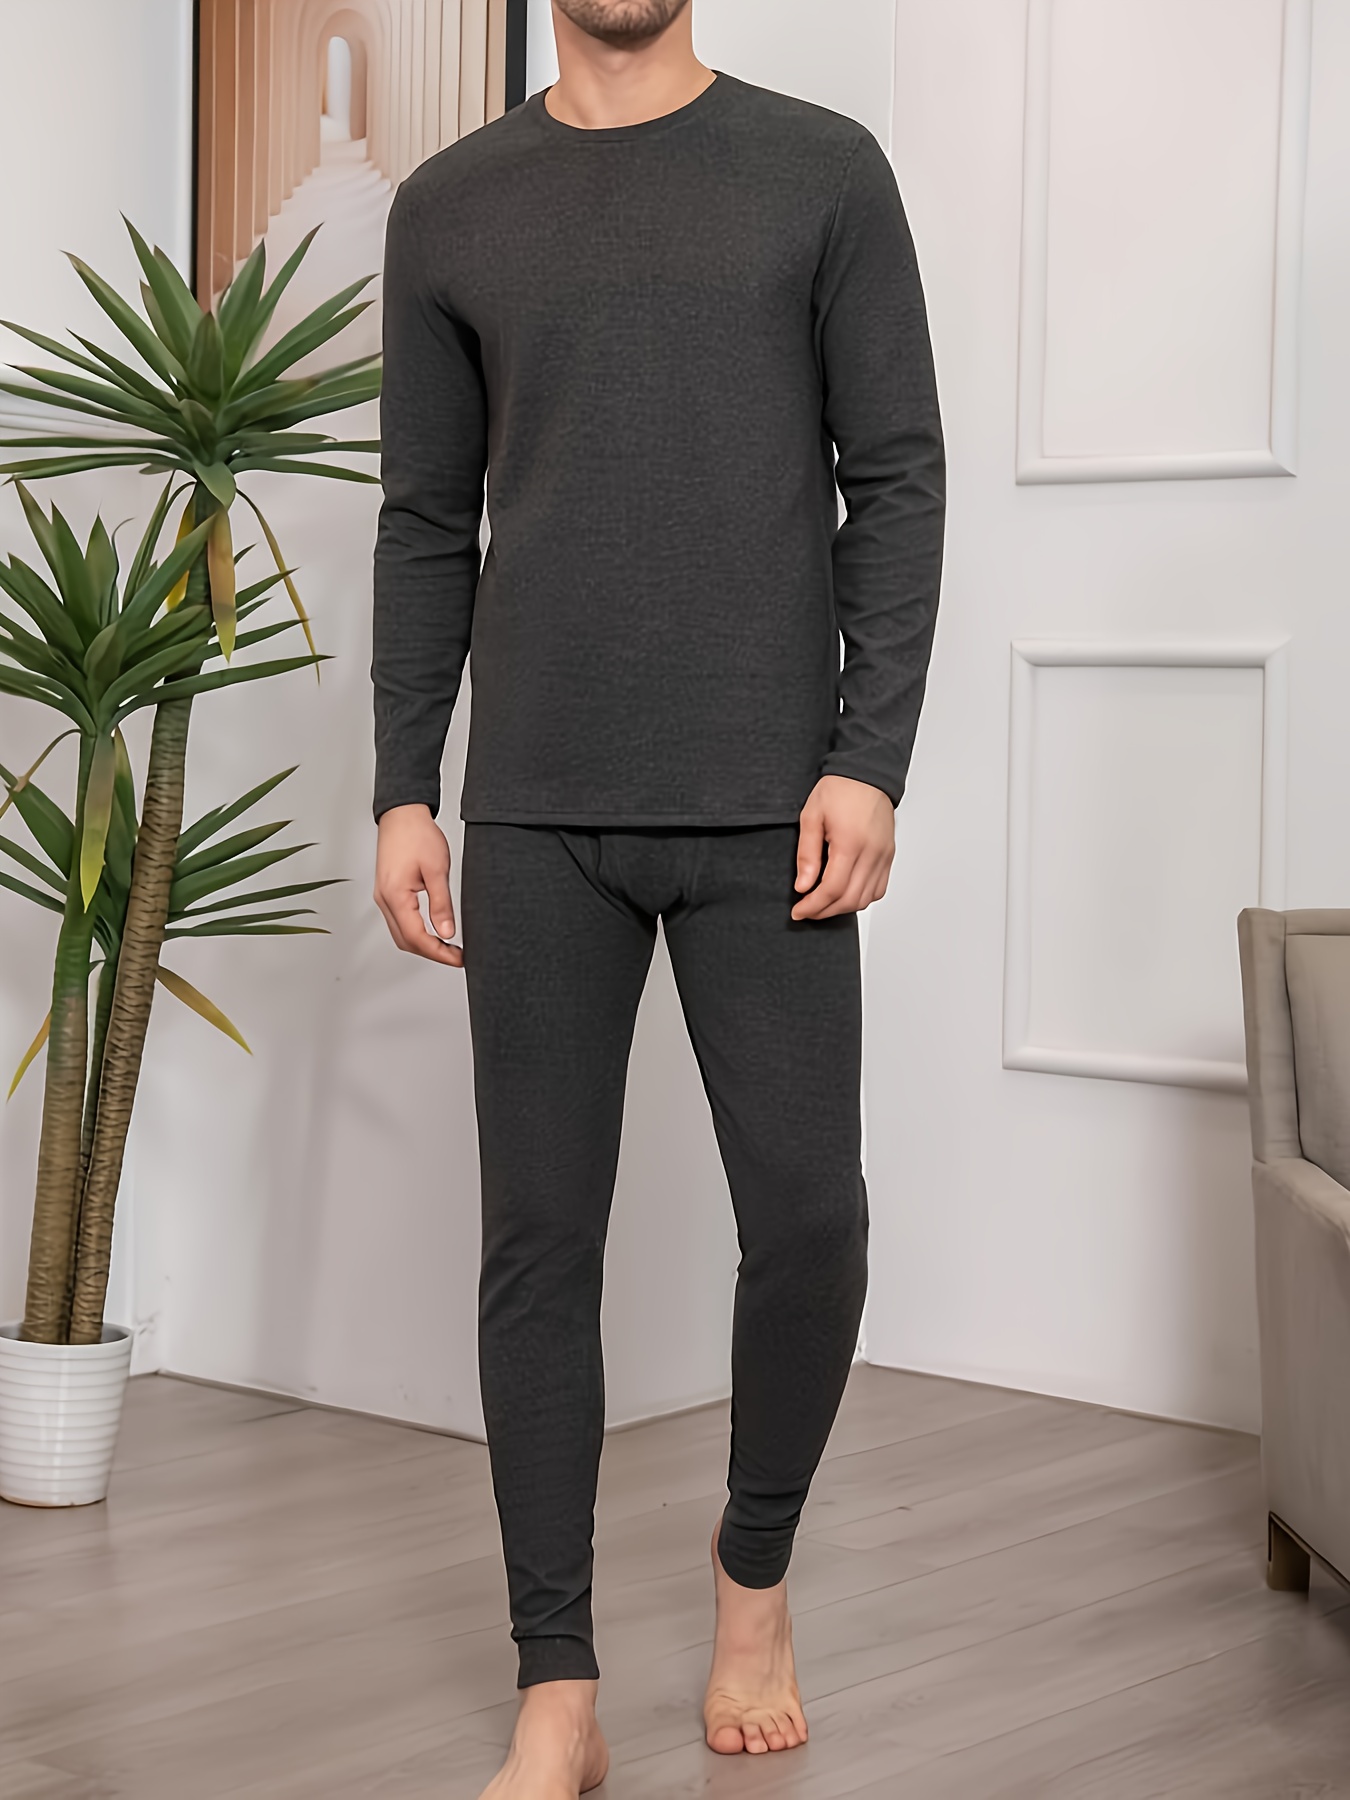 Men's 2 Piece Long Thermal Underwear Set, Cold Weather Base Layer Set for  Men, Gray, XL